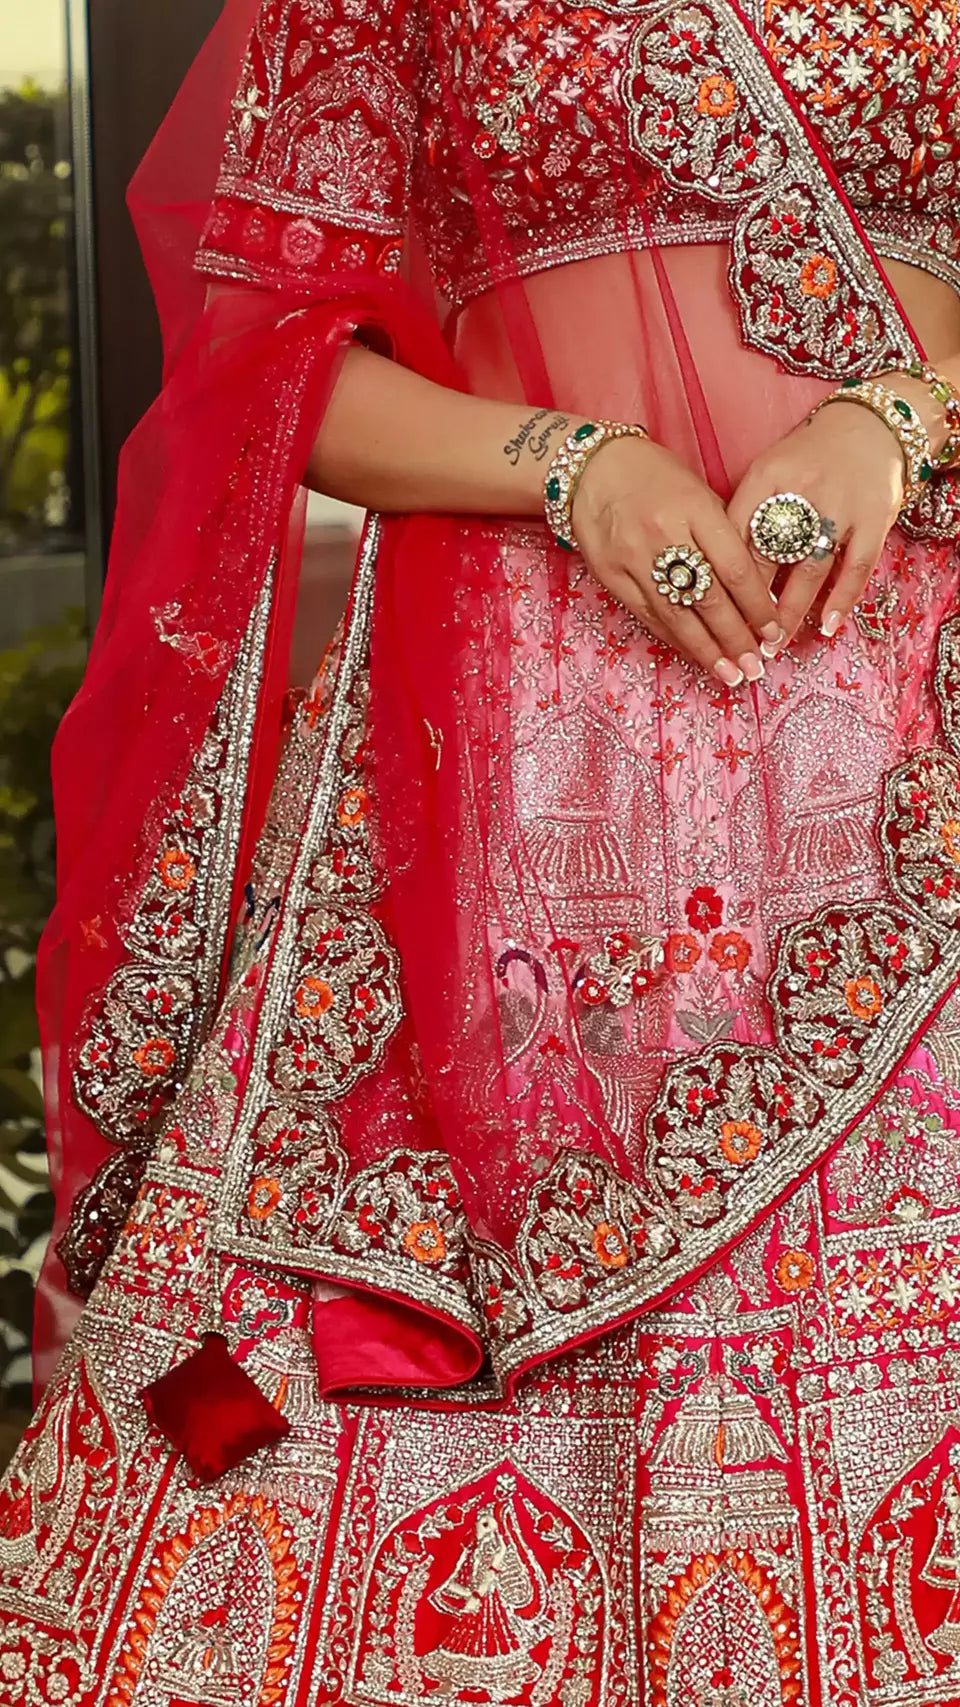 Rent a designer lehenga in Delhi for your wedding!